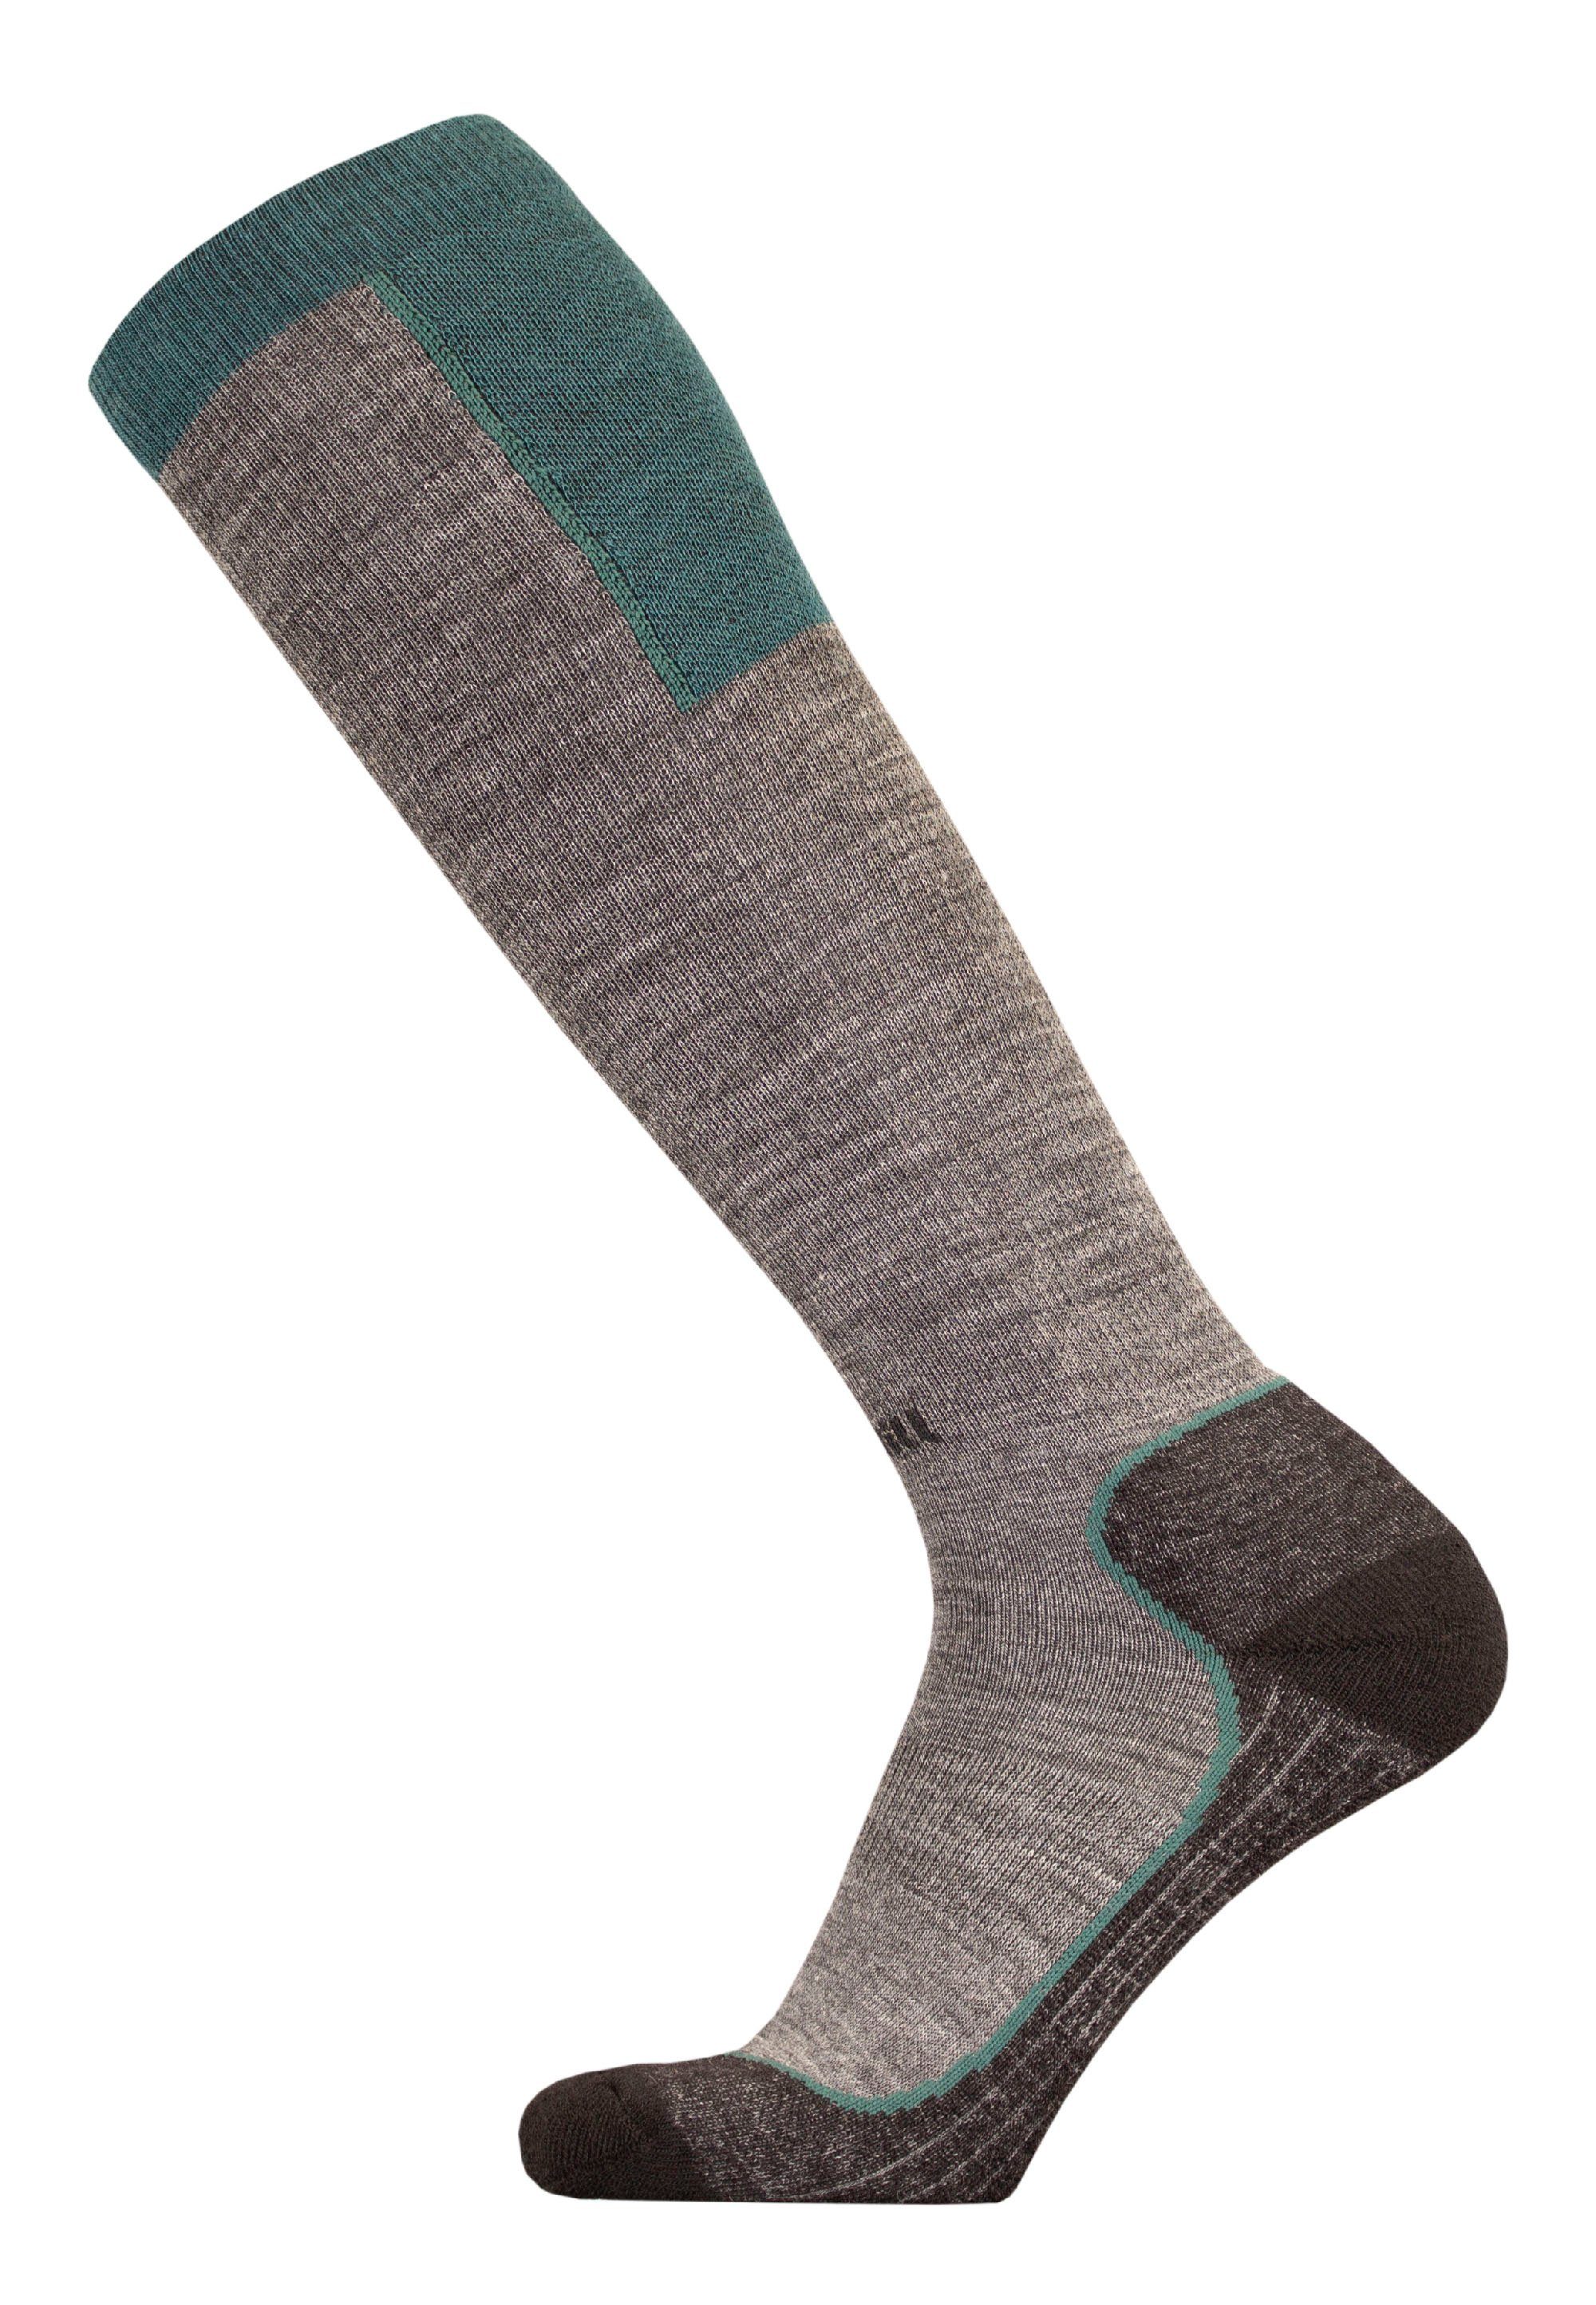 (1-Paar) grau-grün OUNA UphillSport mit Socken mehrlagiger Struktur